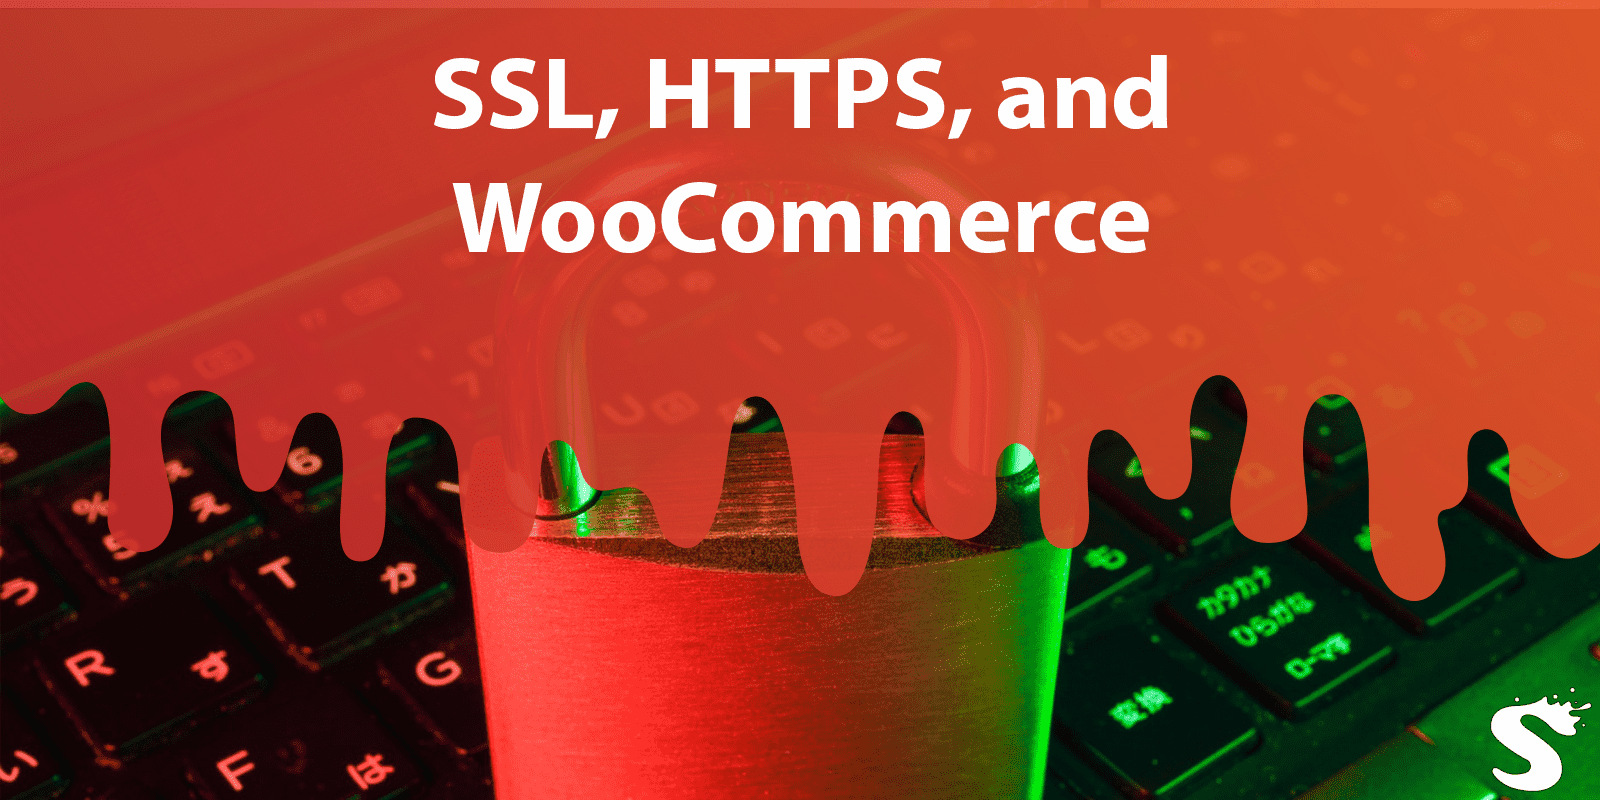 SSL, HTTPS, and WooCommerce